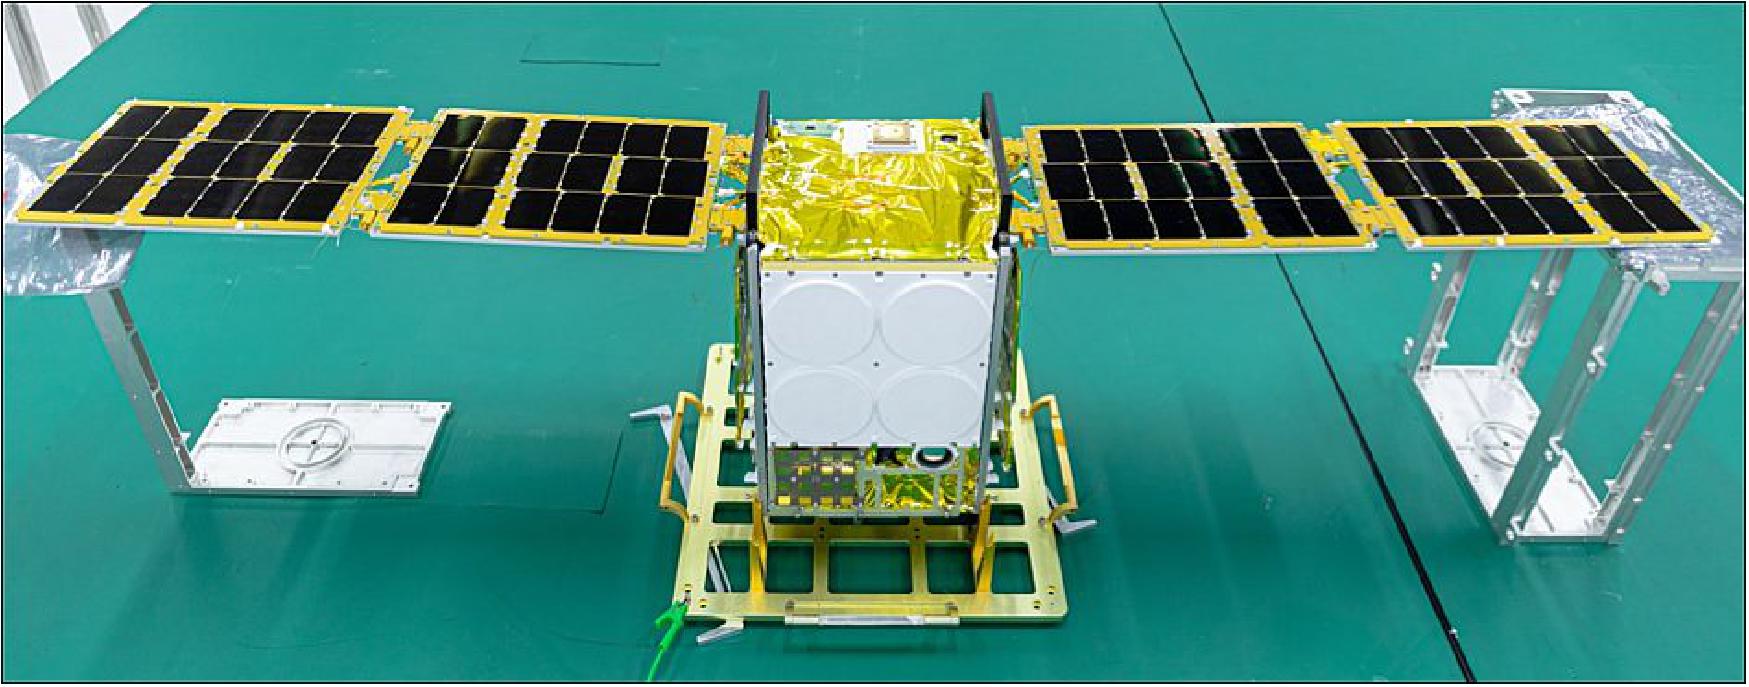 Figure 3: Illustration of the deployed Beihangkongshi-1 satellite (image credit: Spacety)